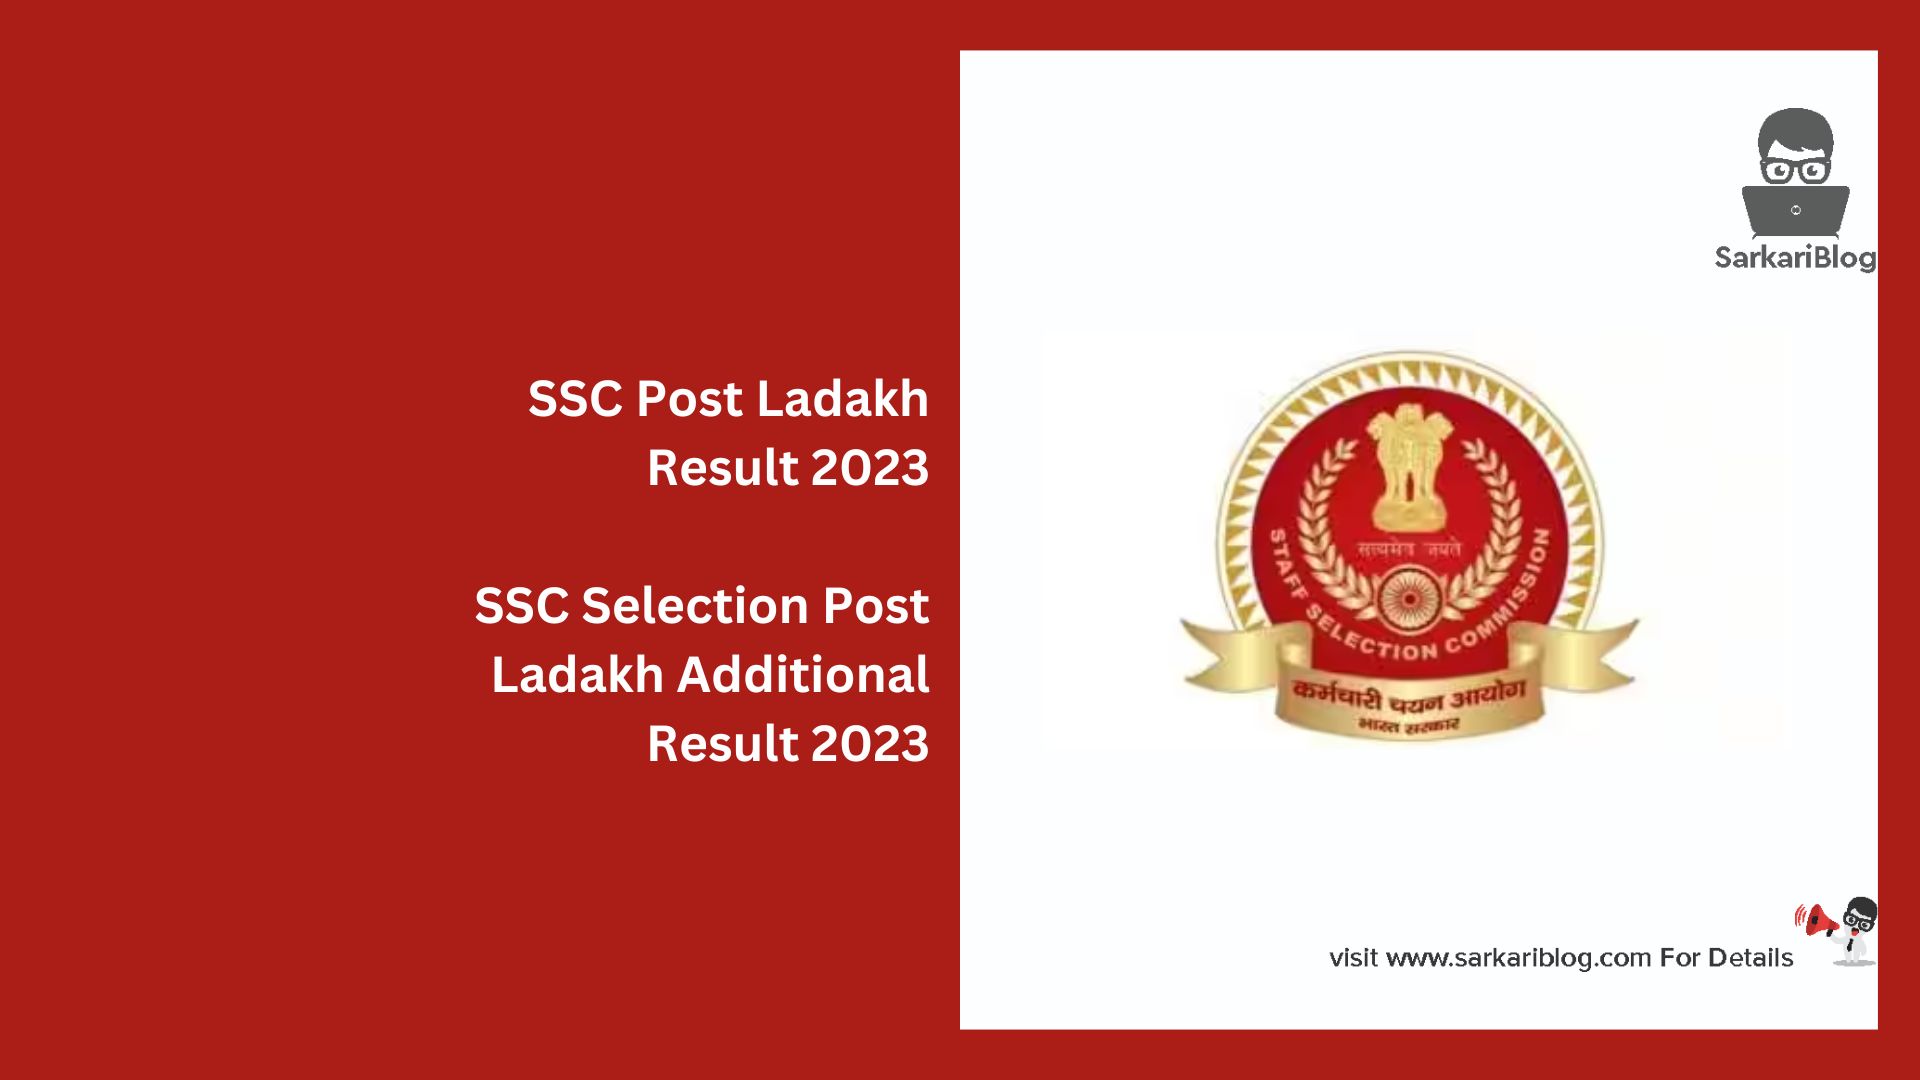 SSC Post Ladakh Result 2023